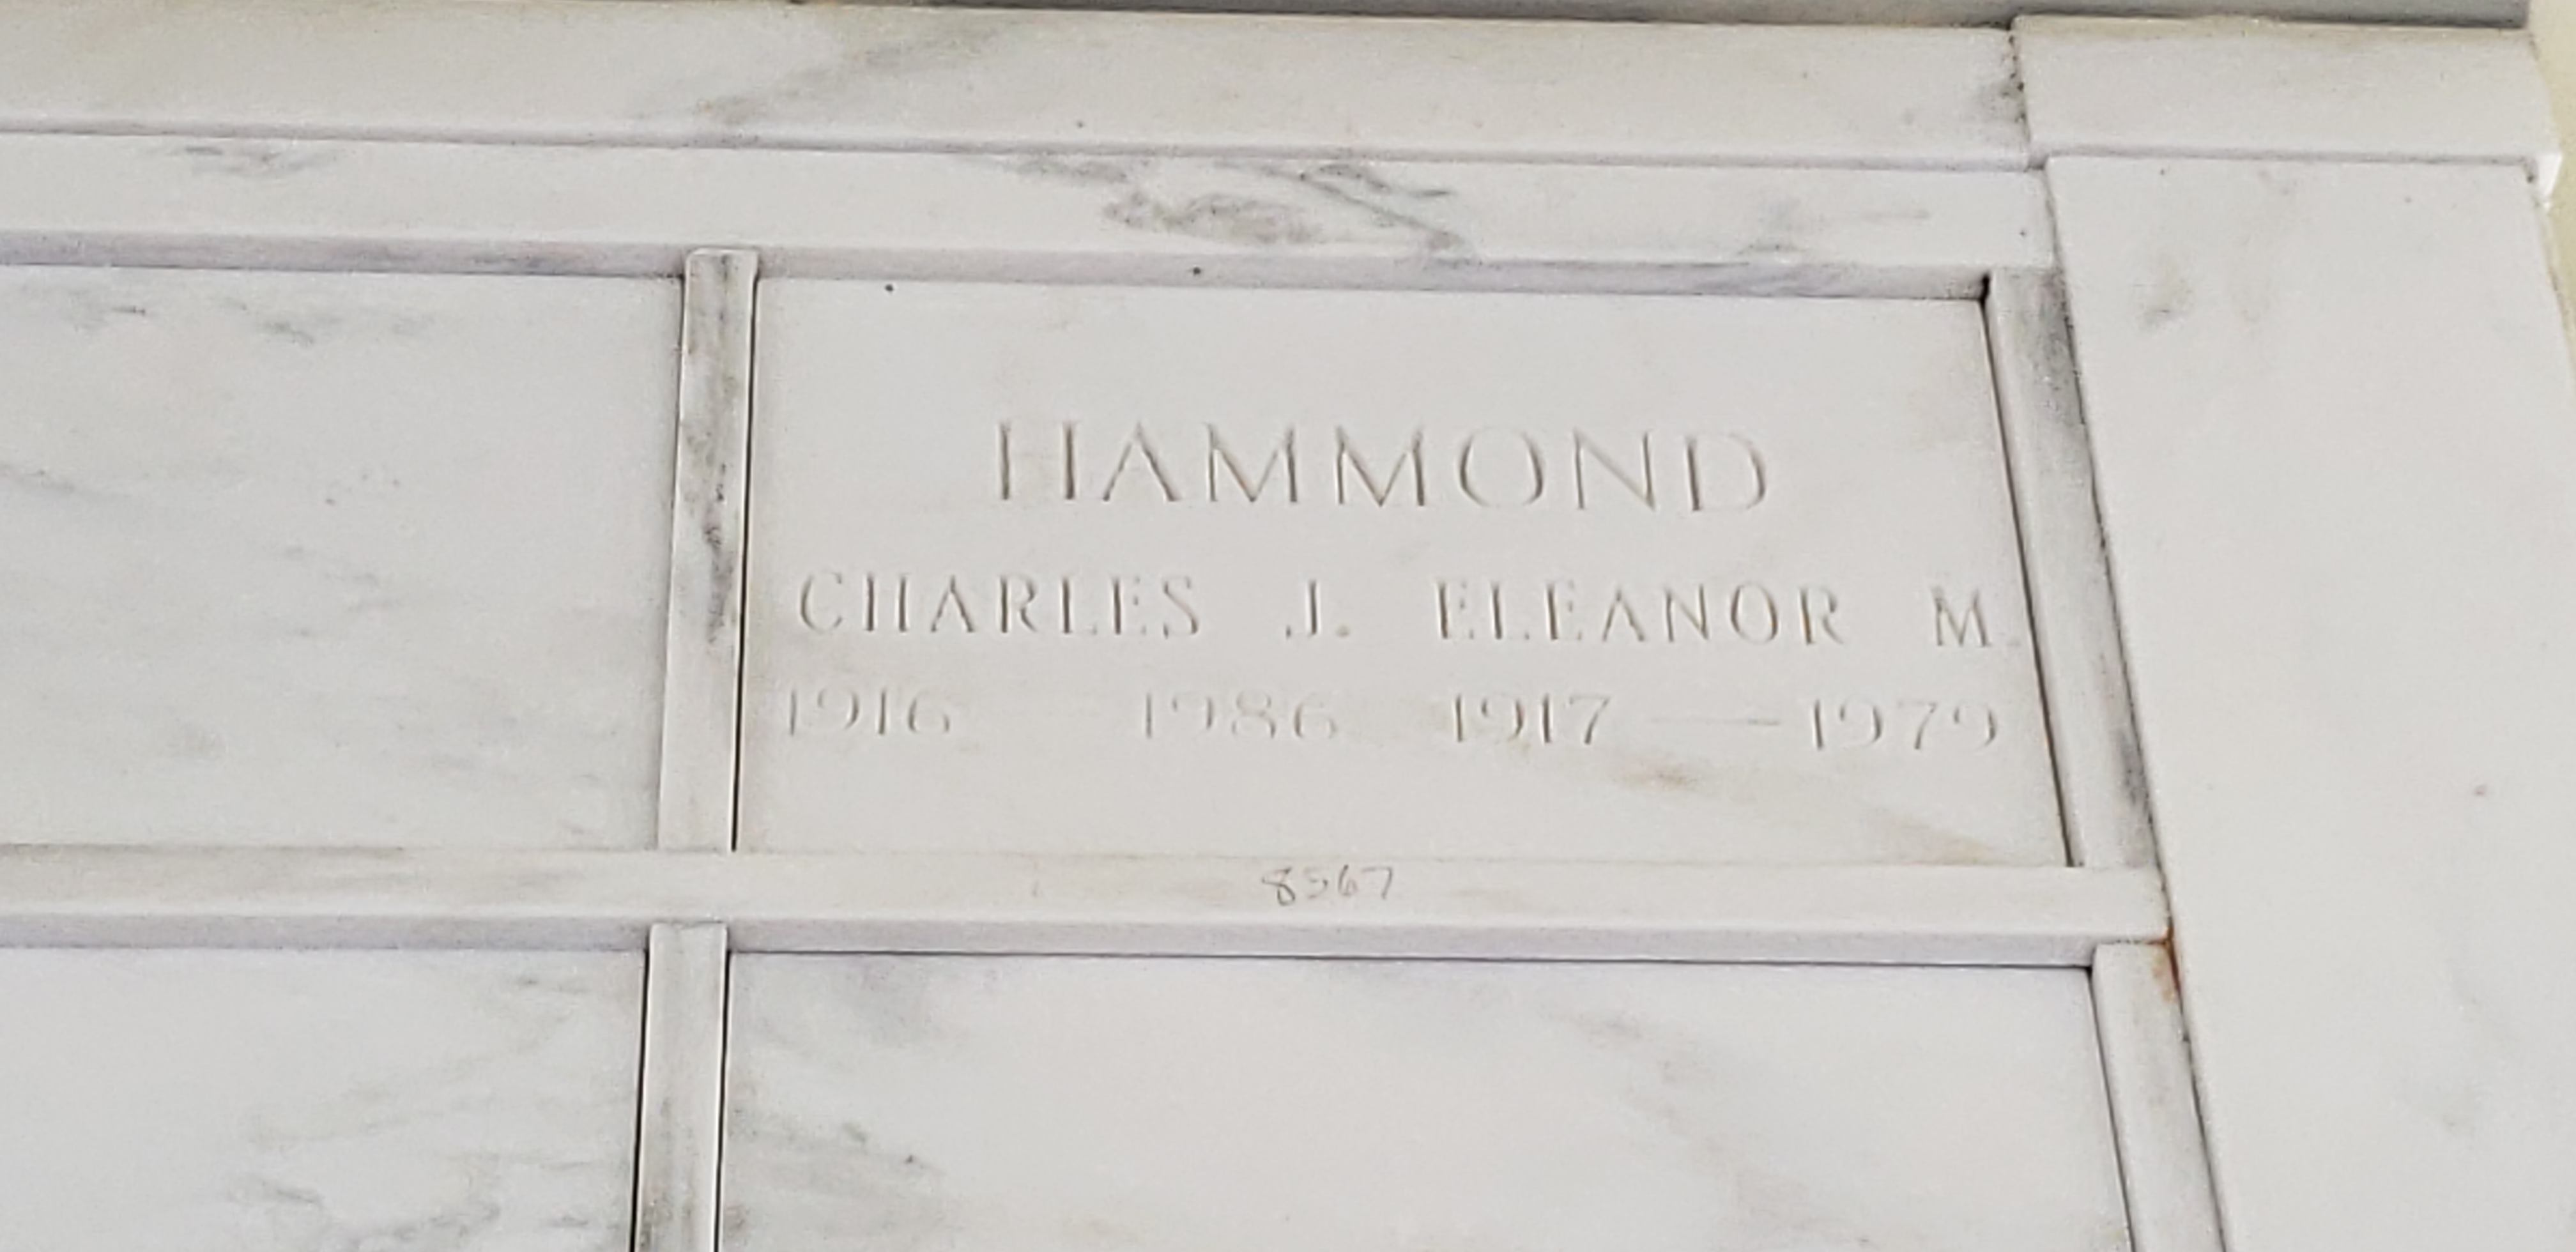 Eleanor M Hammond